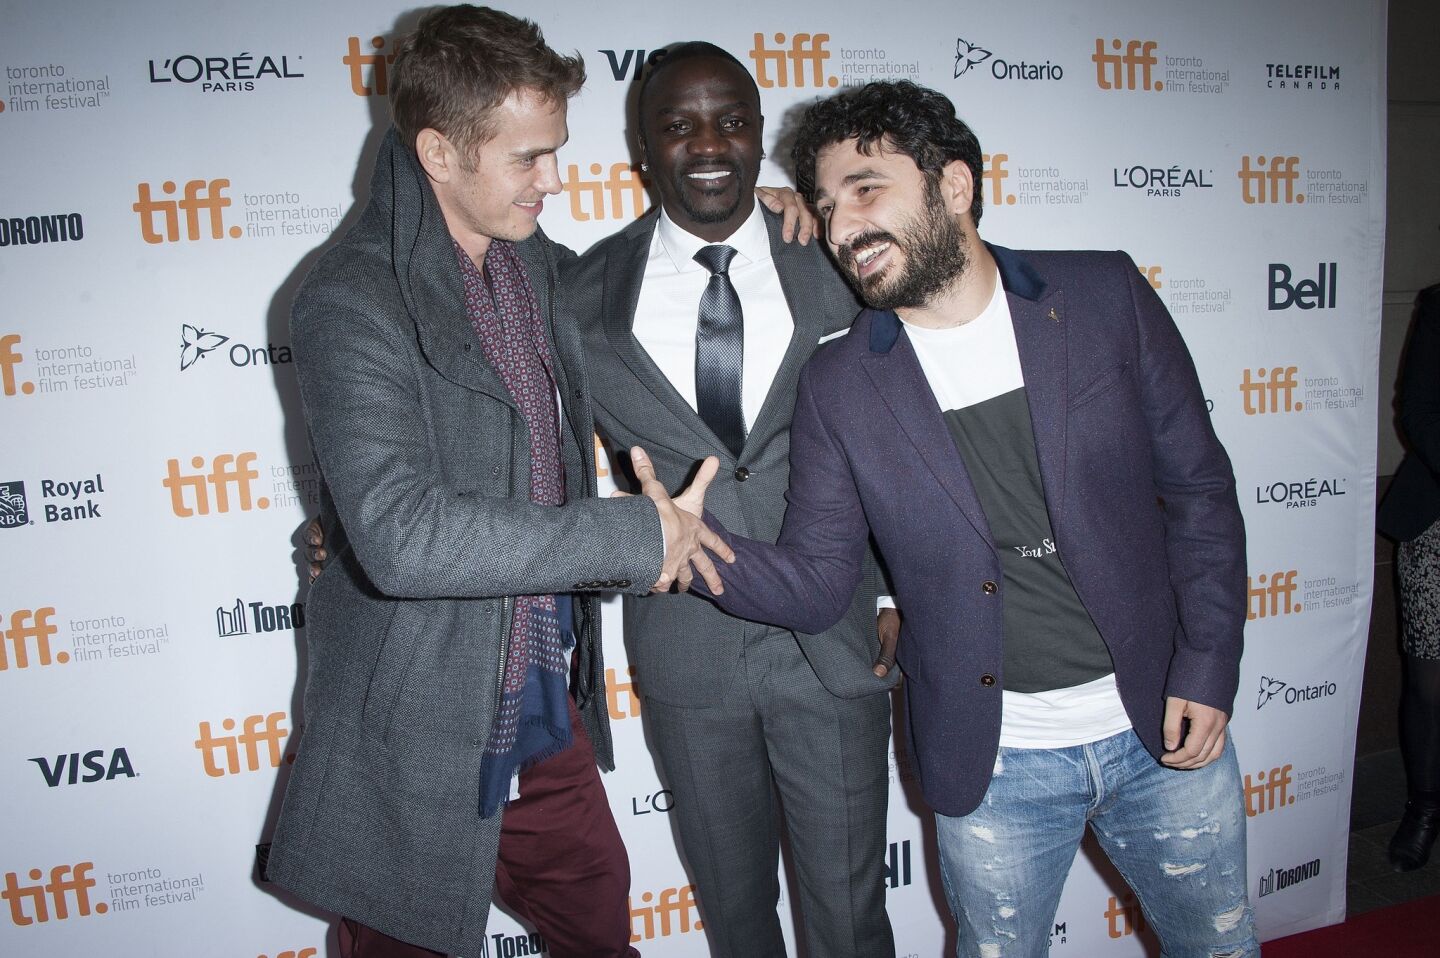 Toronto International Film Festival 2014